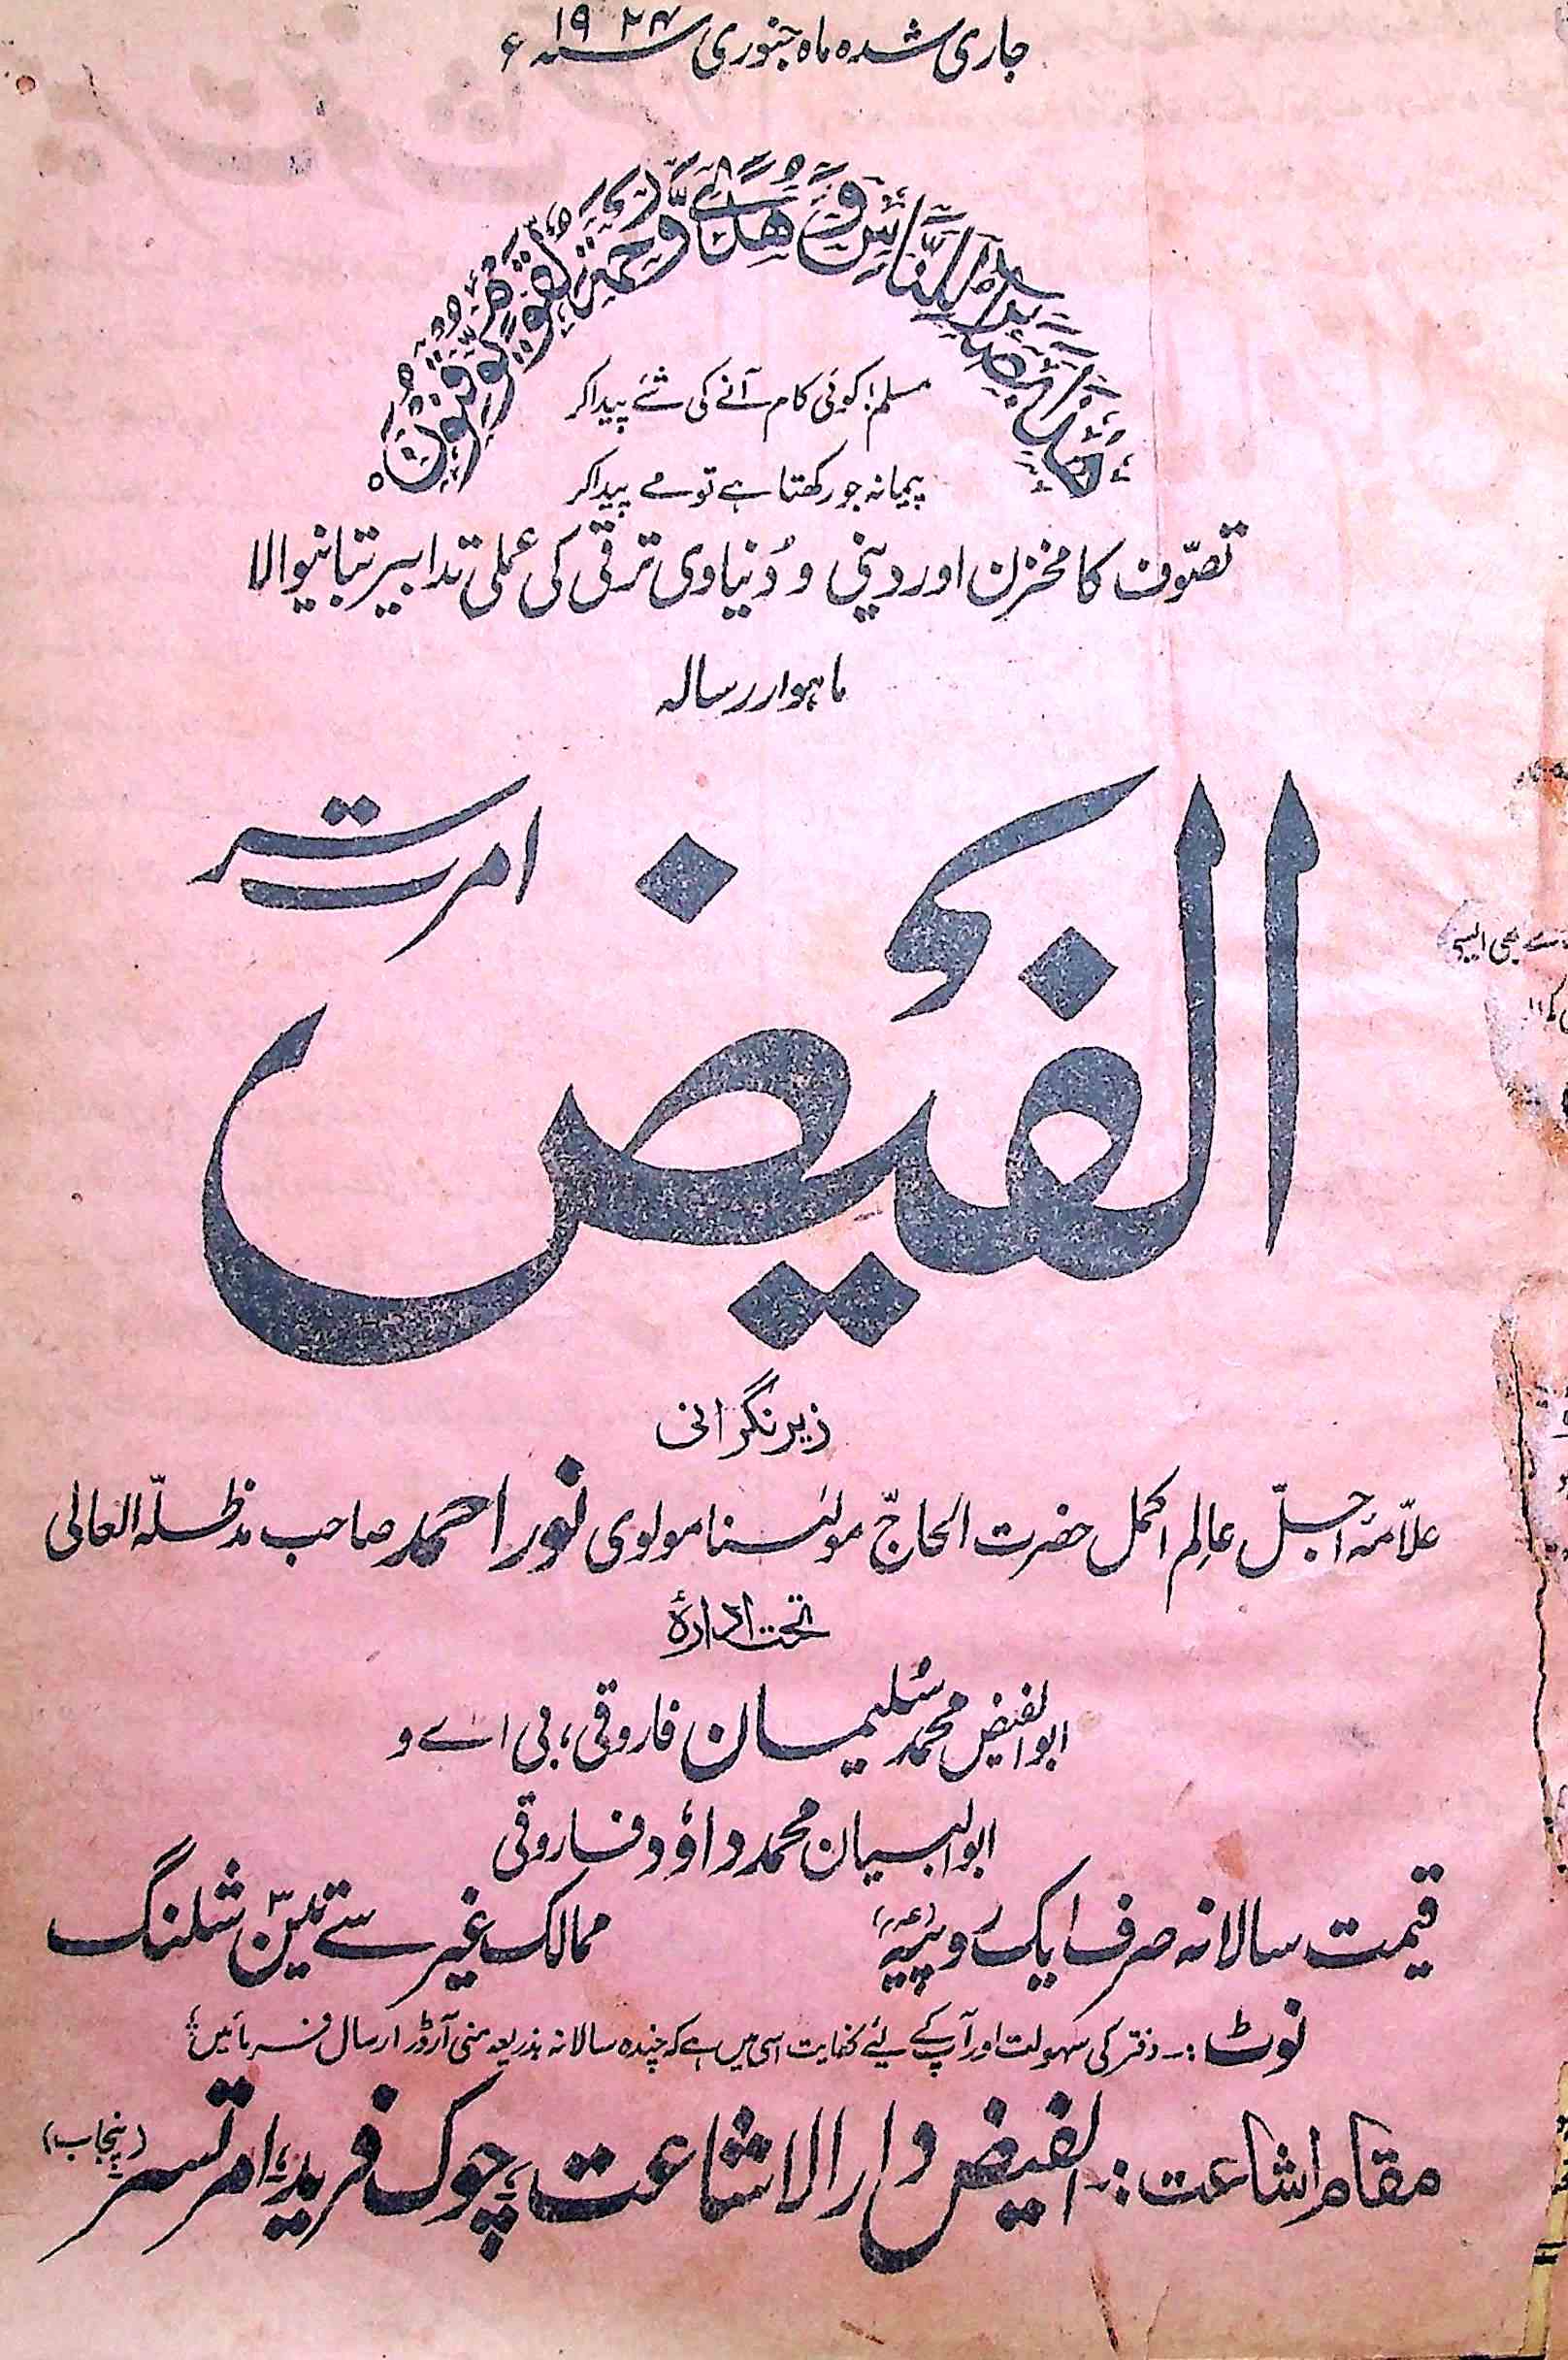 Alfaiz Amritsar February 1928